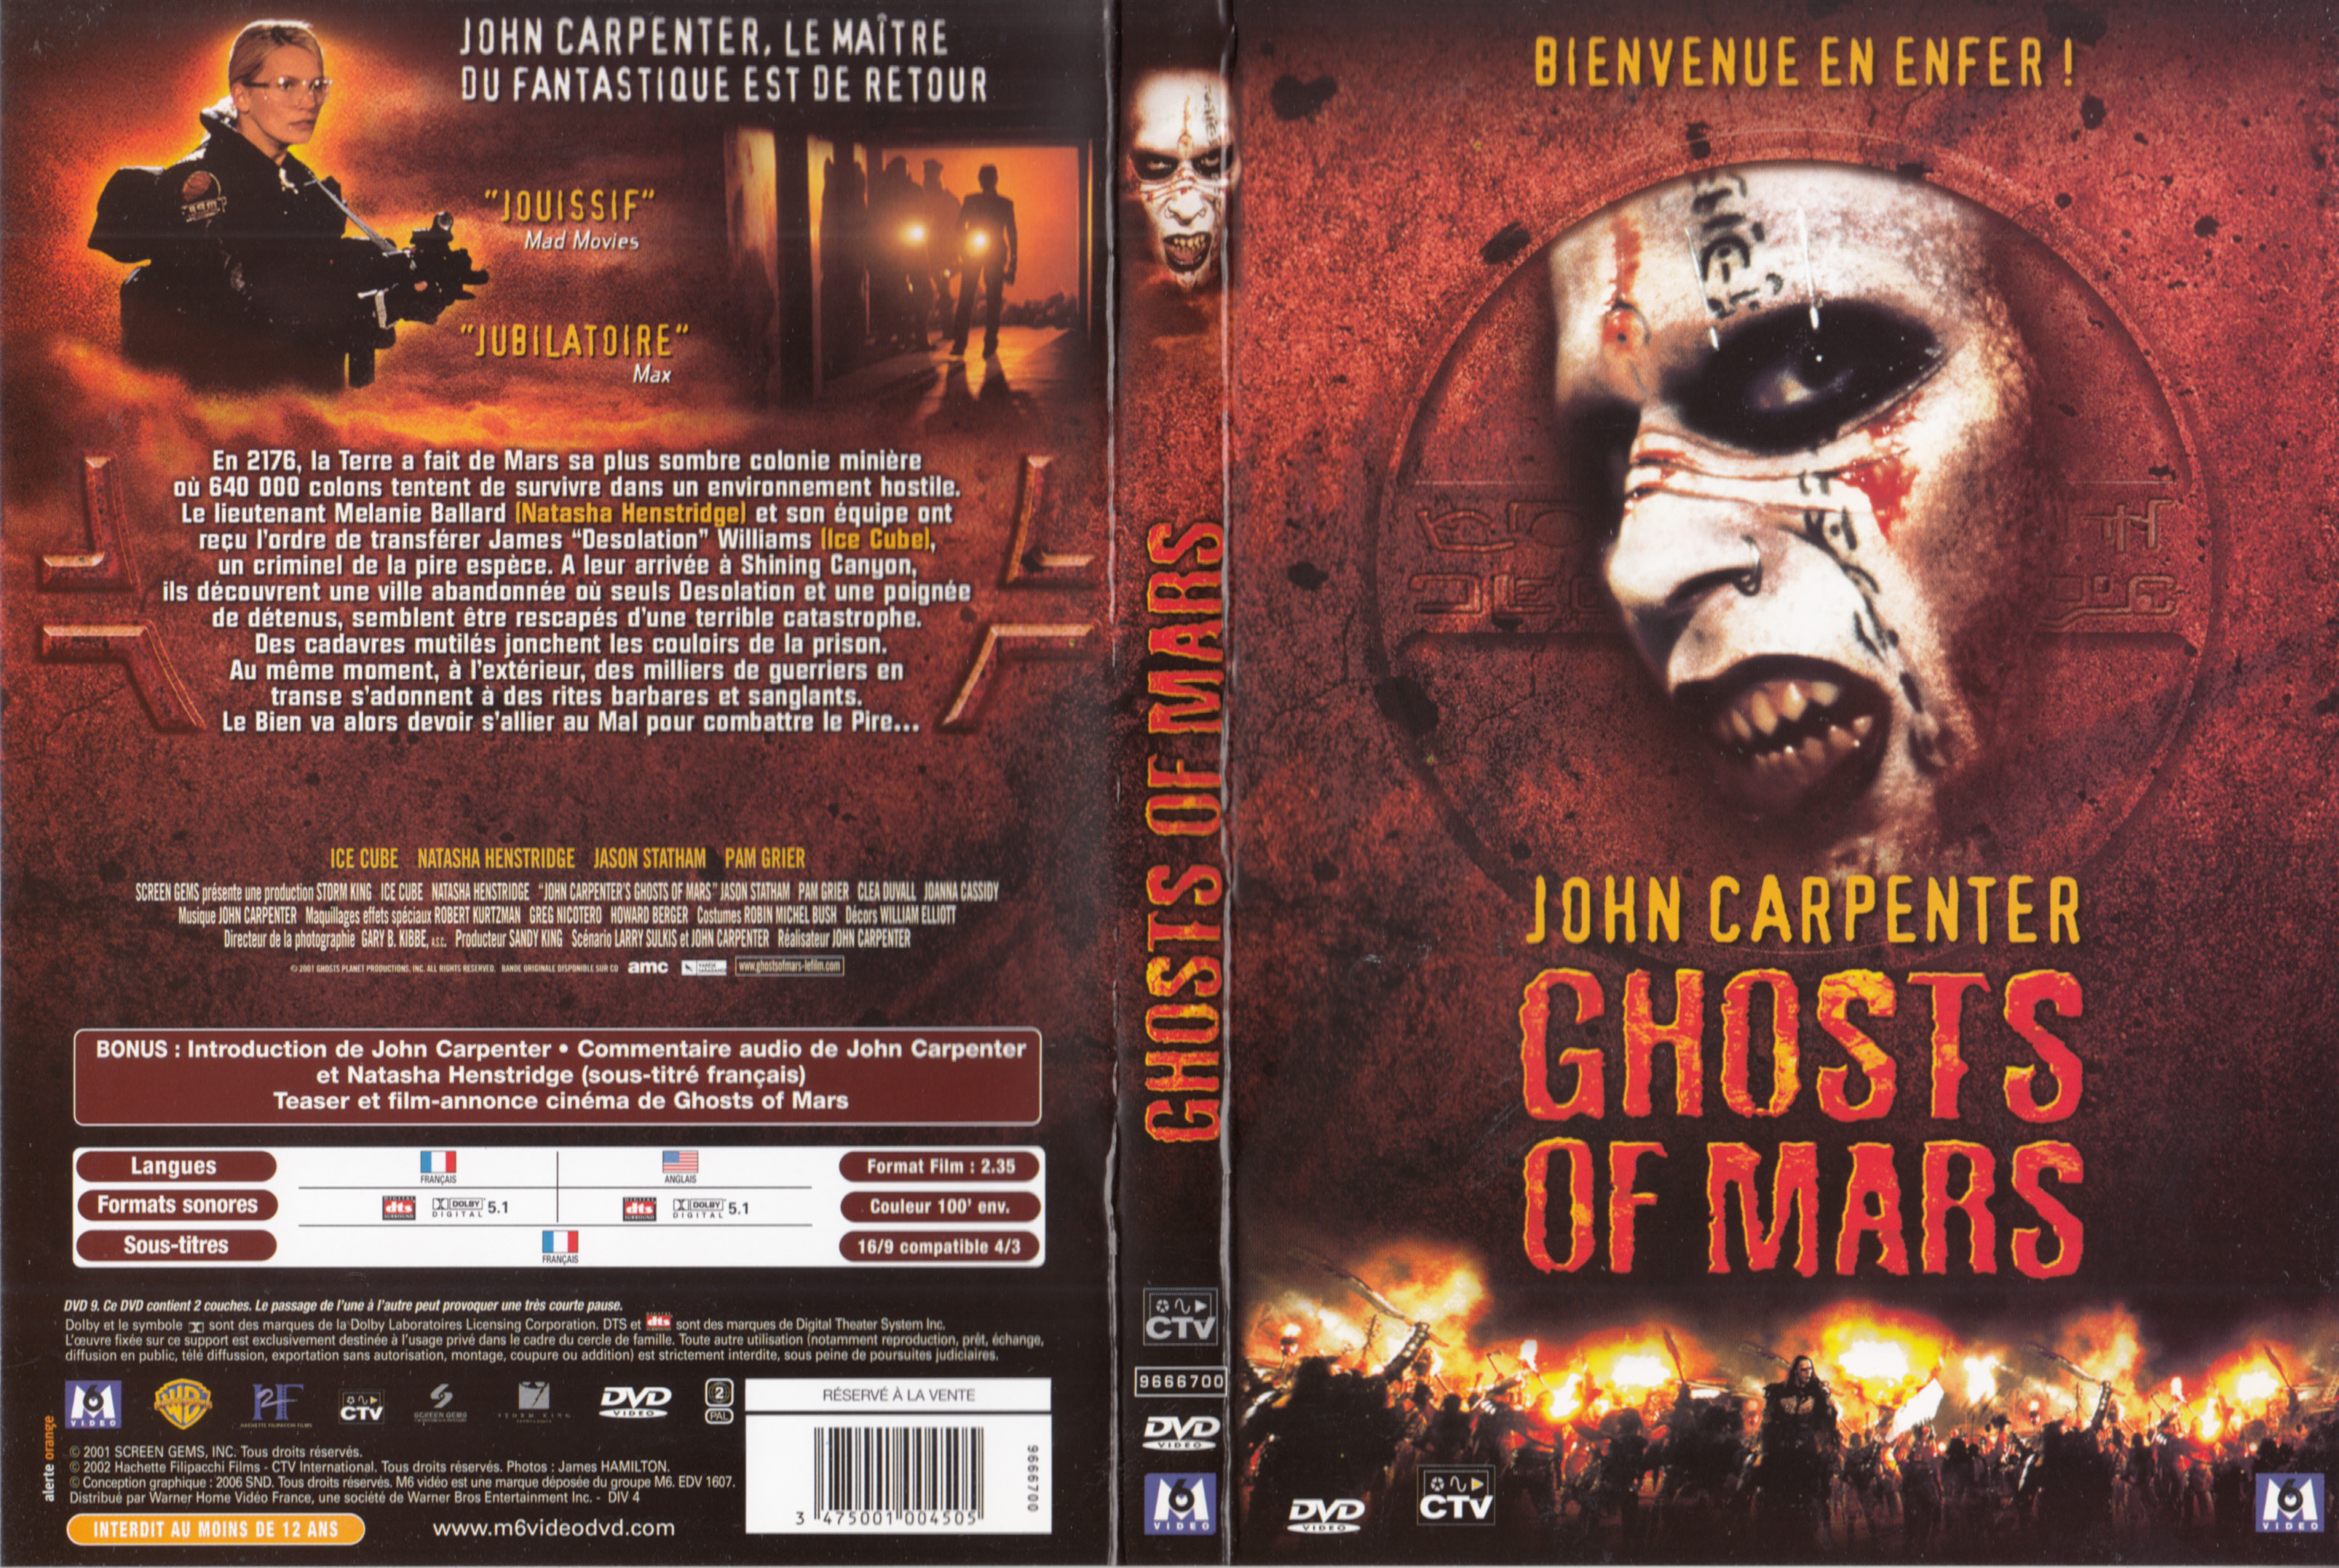 Jaquette DVD Ghosts of mars v4